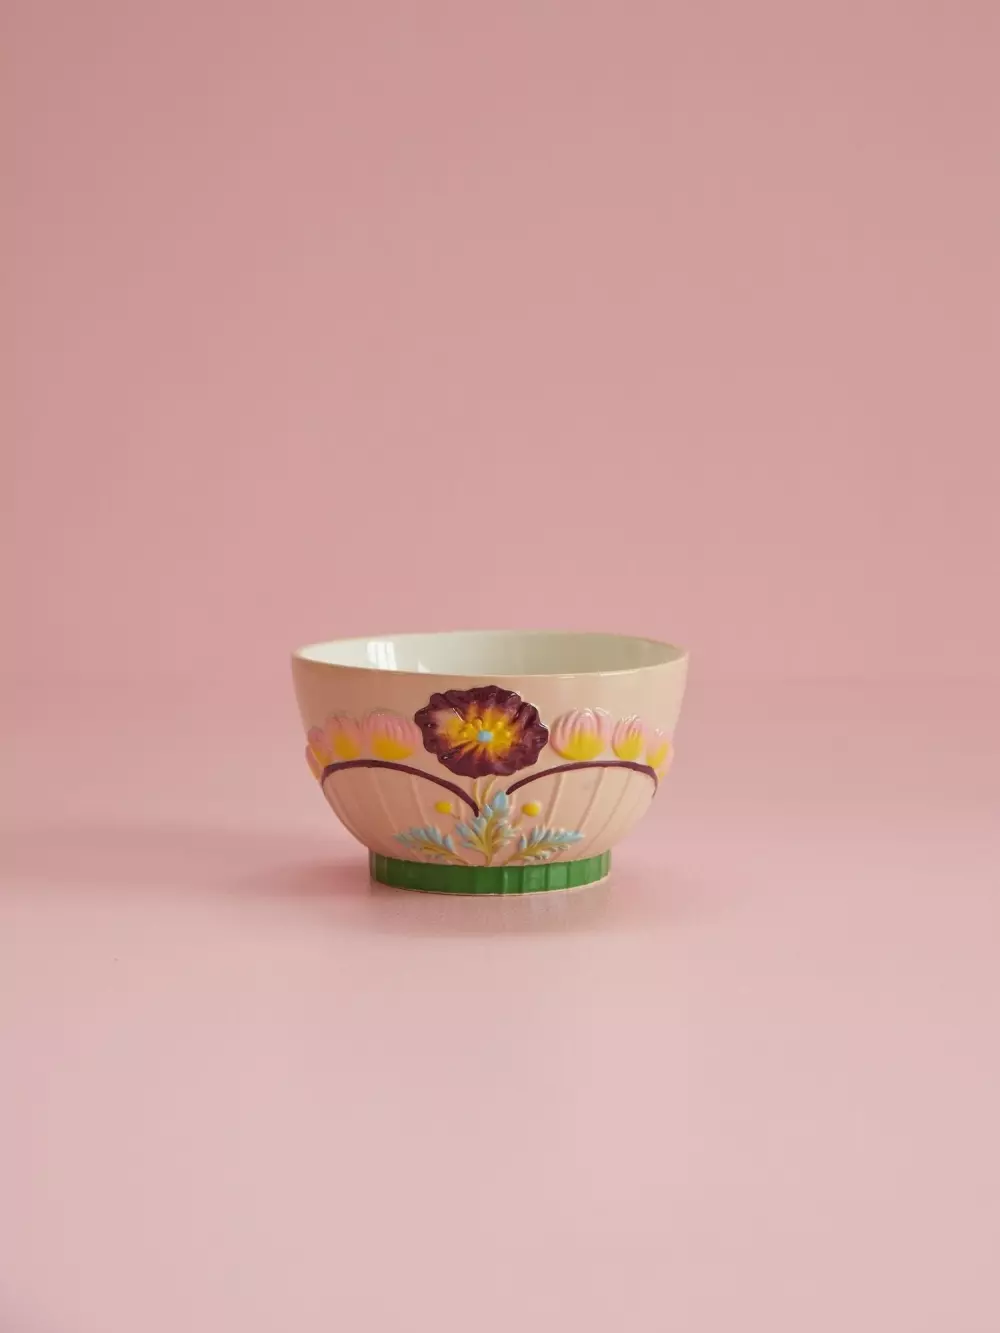 Keramikkbolle Med Blomstermotiv, 5708315248029, CEBWL-EMSS, Kjøkken, Skåler og Ildfaste Former, Rice, Ceramic Bowl with Embossed Flower Design - Soft Sand - 600 ml